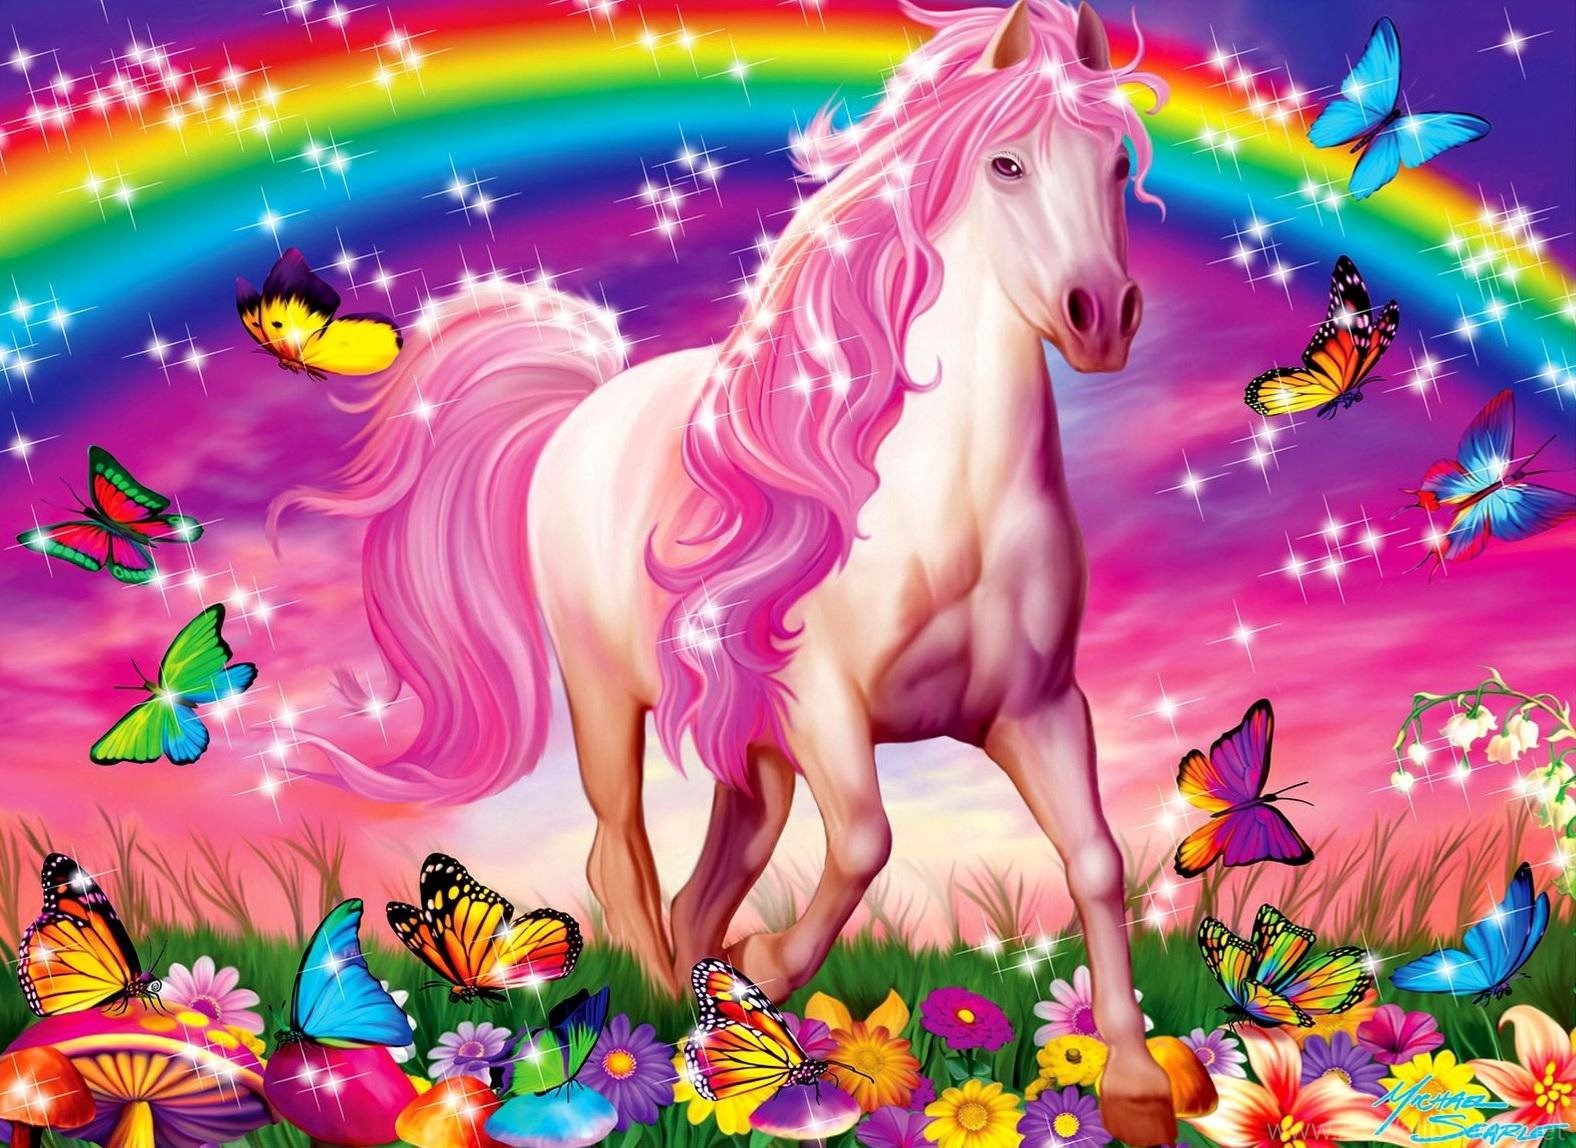 unicorn wallpaper,fictional character,horse,unicorn,pony,mythical creature